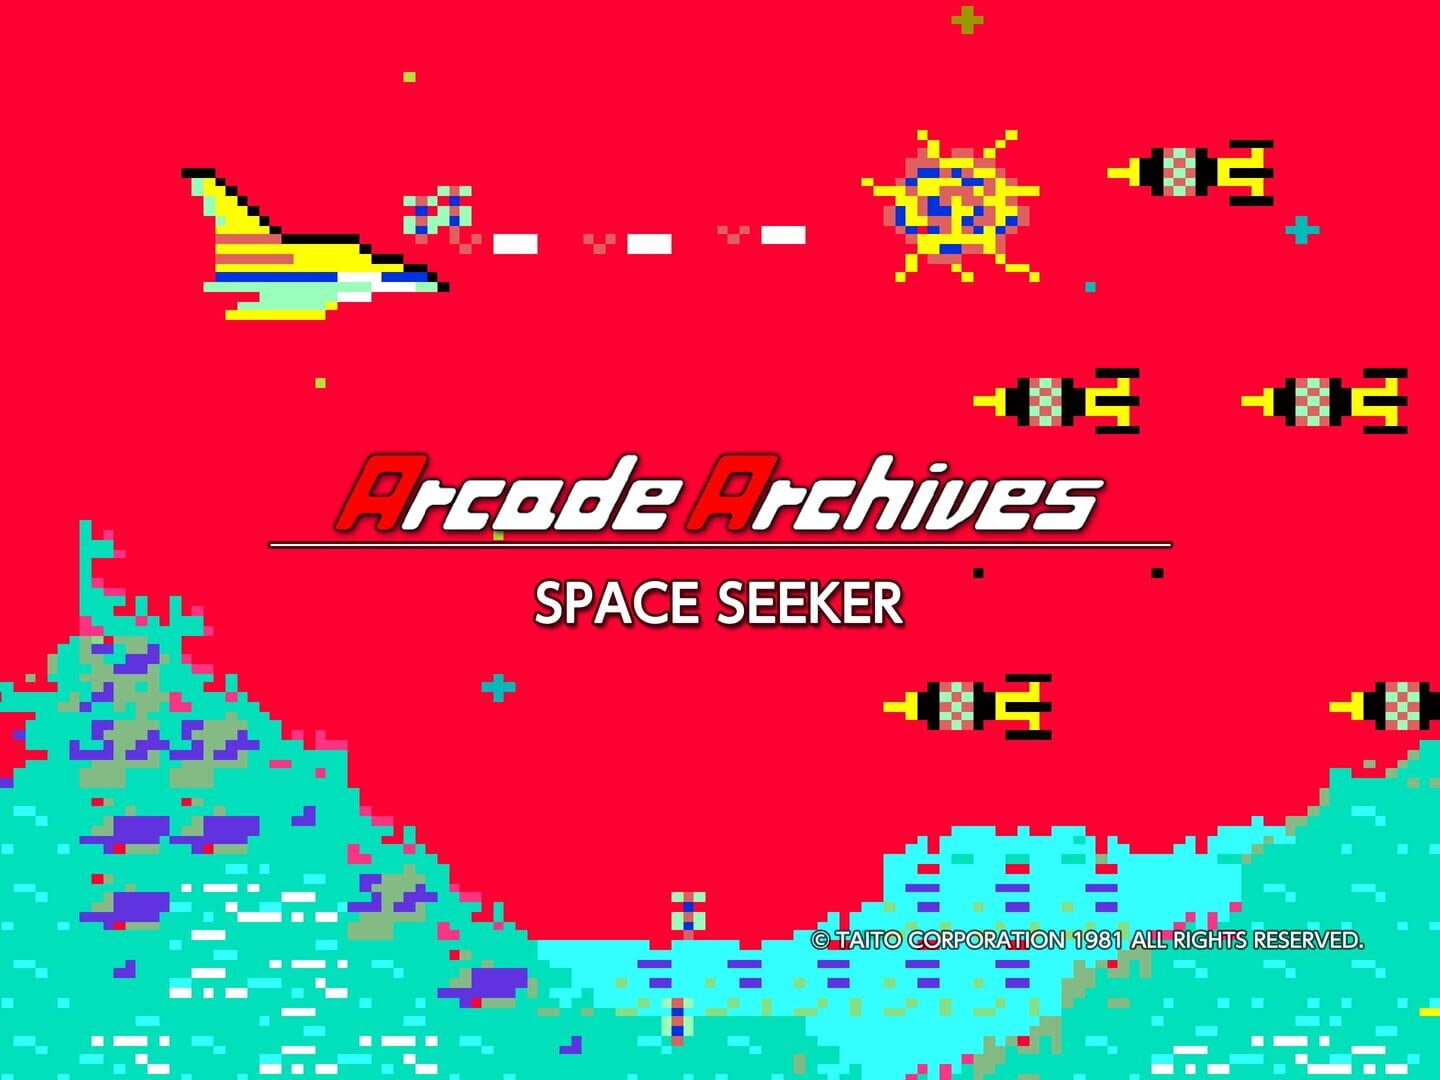 Arcade Archives: Space Seeker artwork